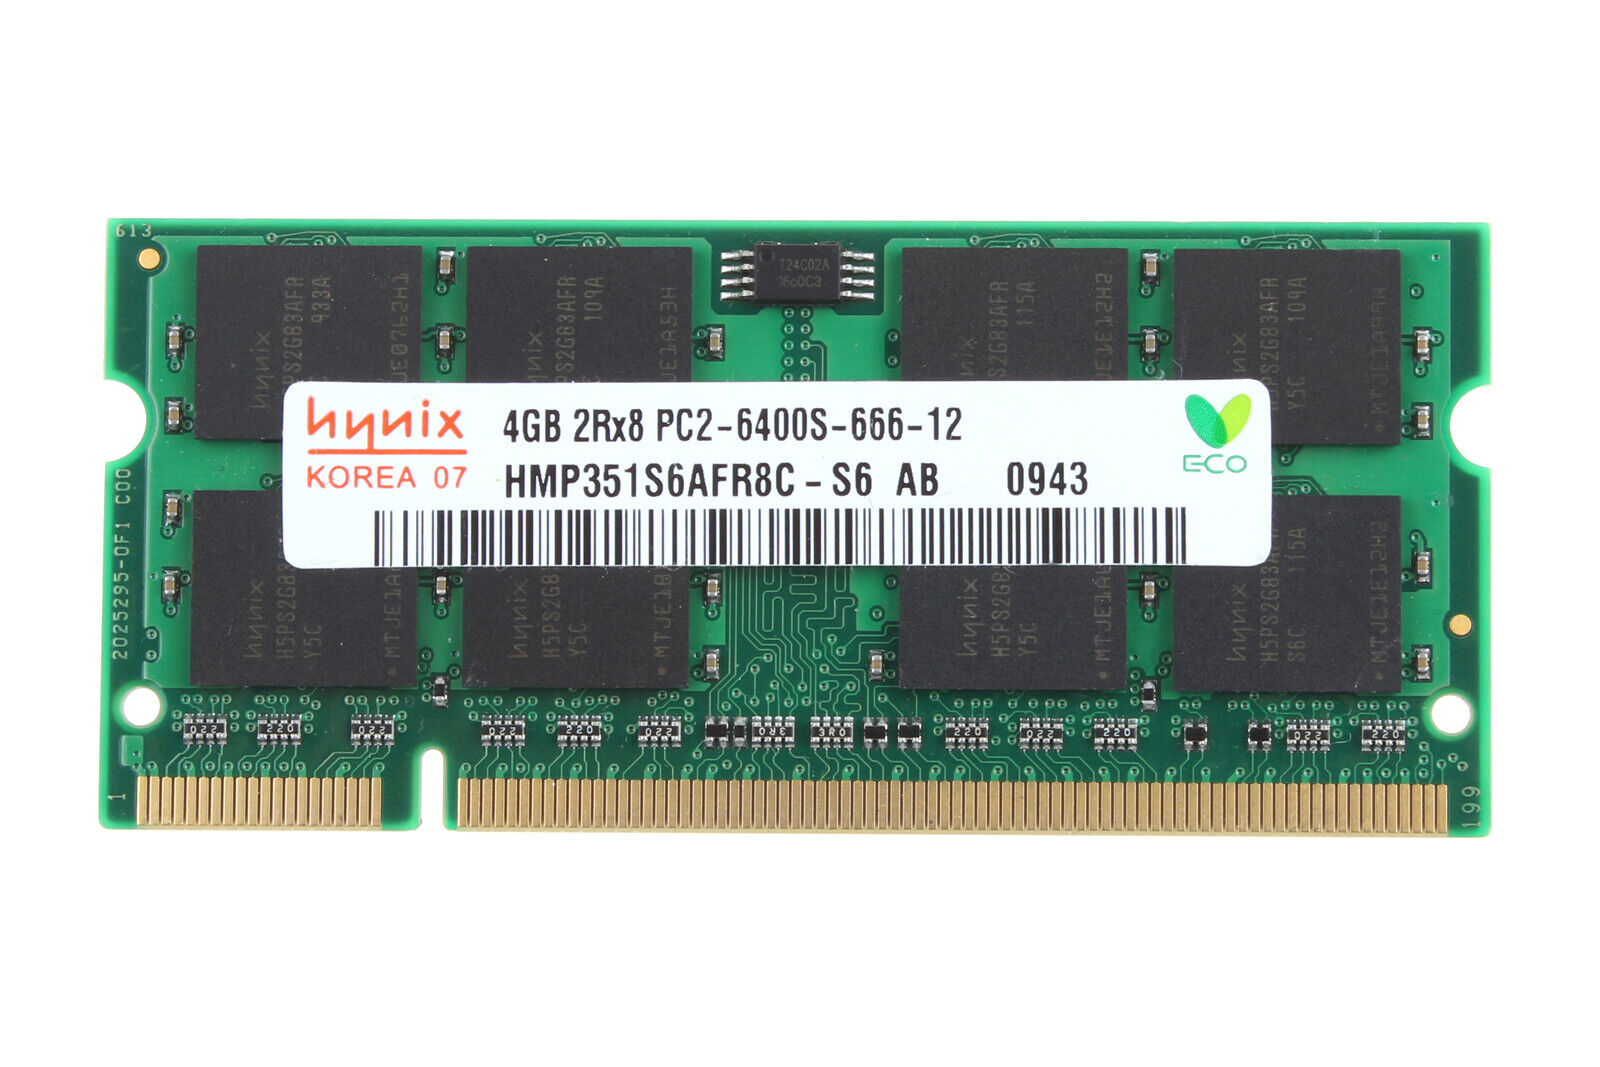 Hynix 4GB 2Rx8 PC2-6400S Laptop CL6 RAM 200Pin DDR2 800Mhz Memory SO-DIMM lot@